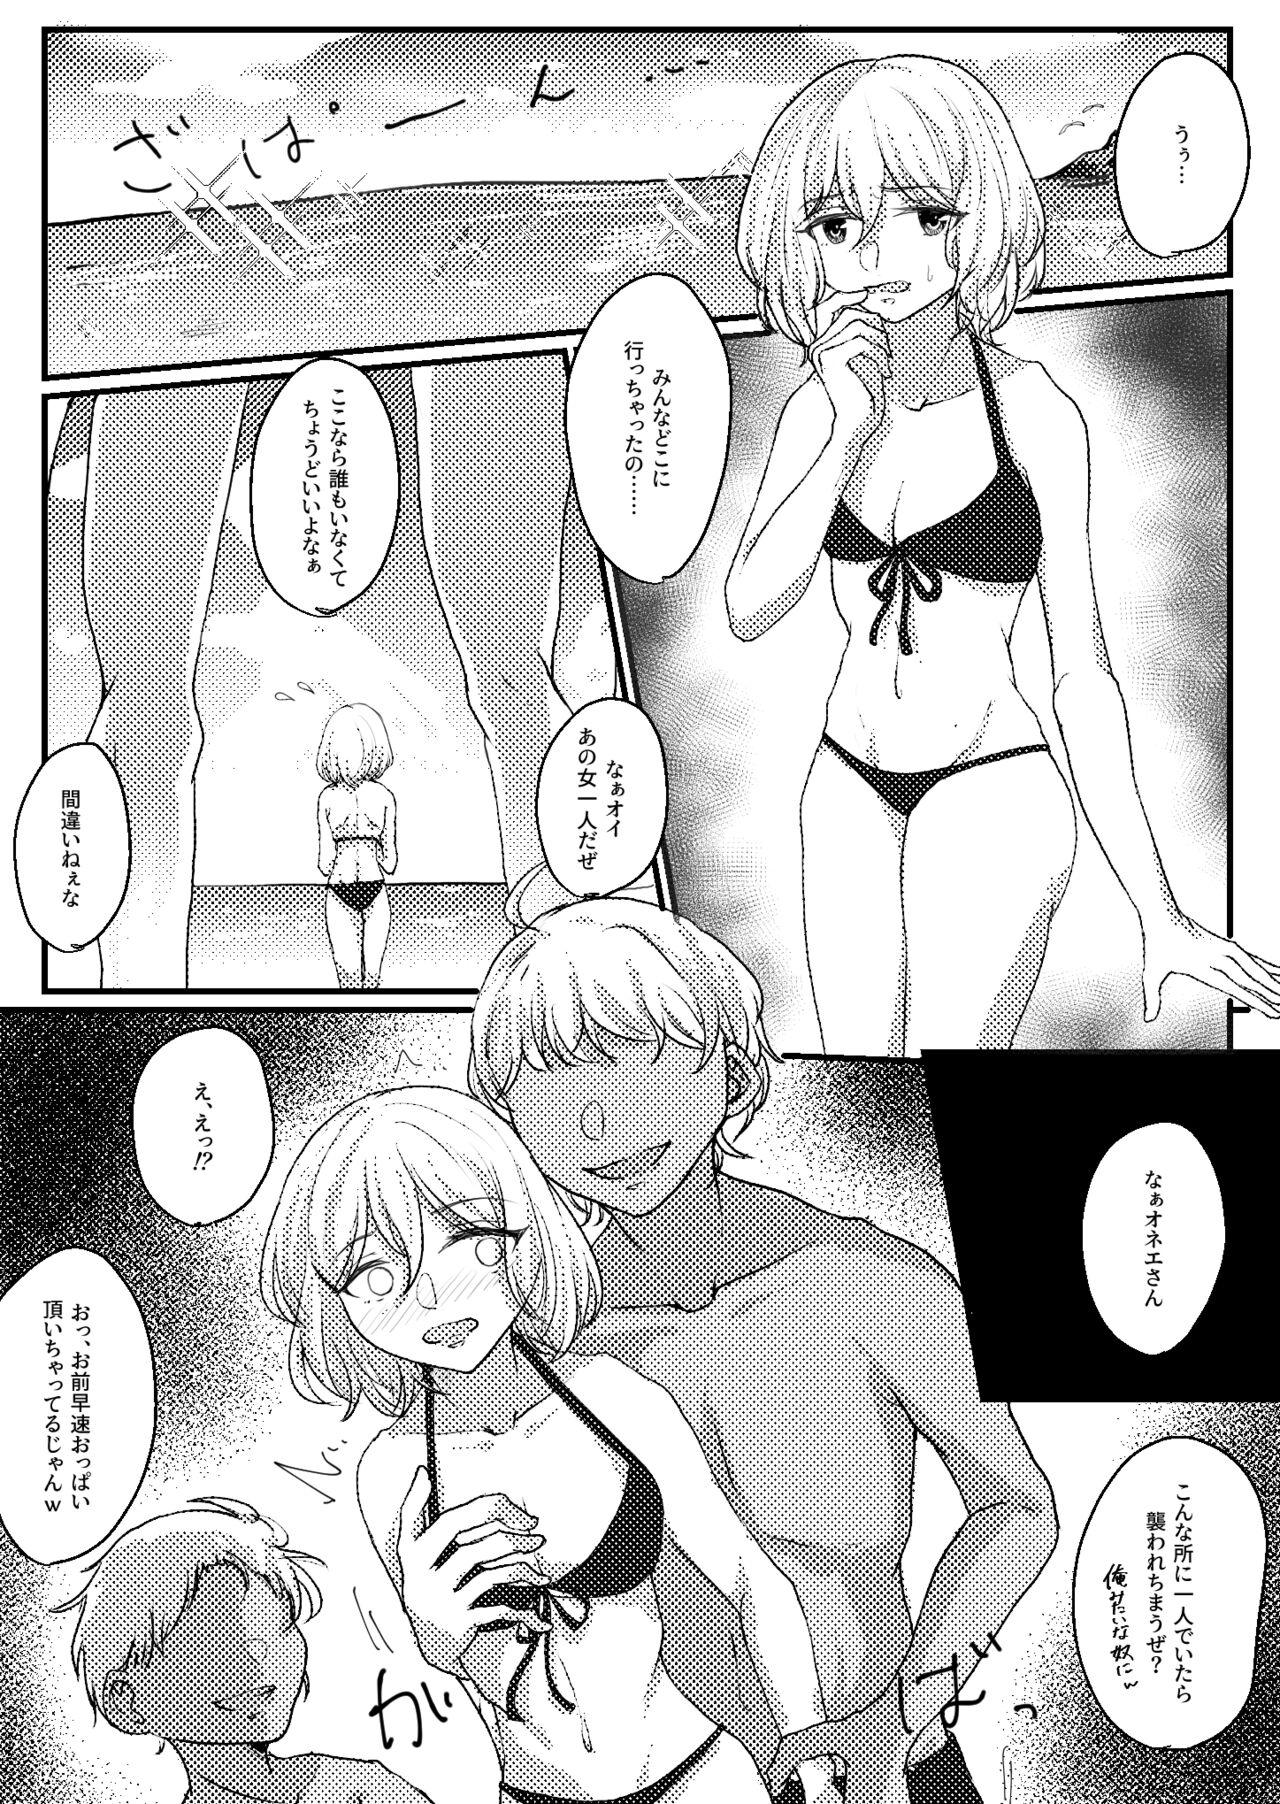 Mashiro beach sex commission 0